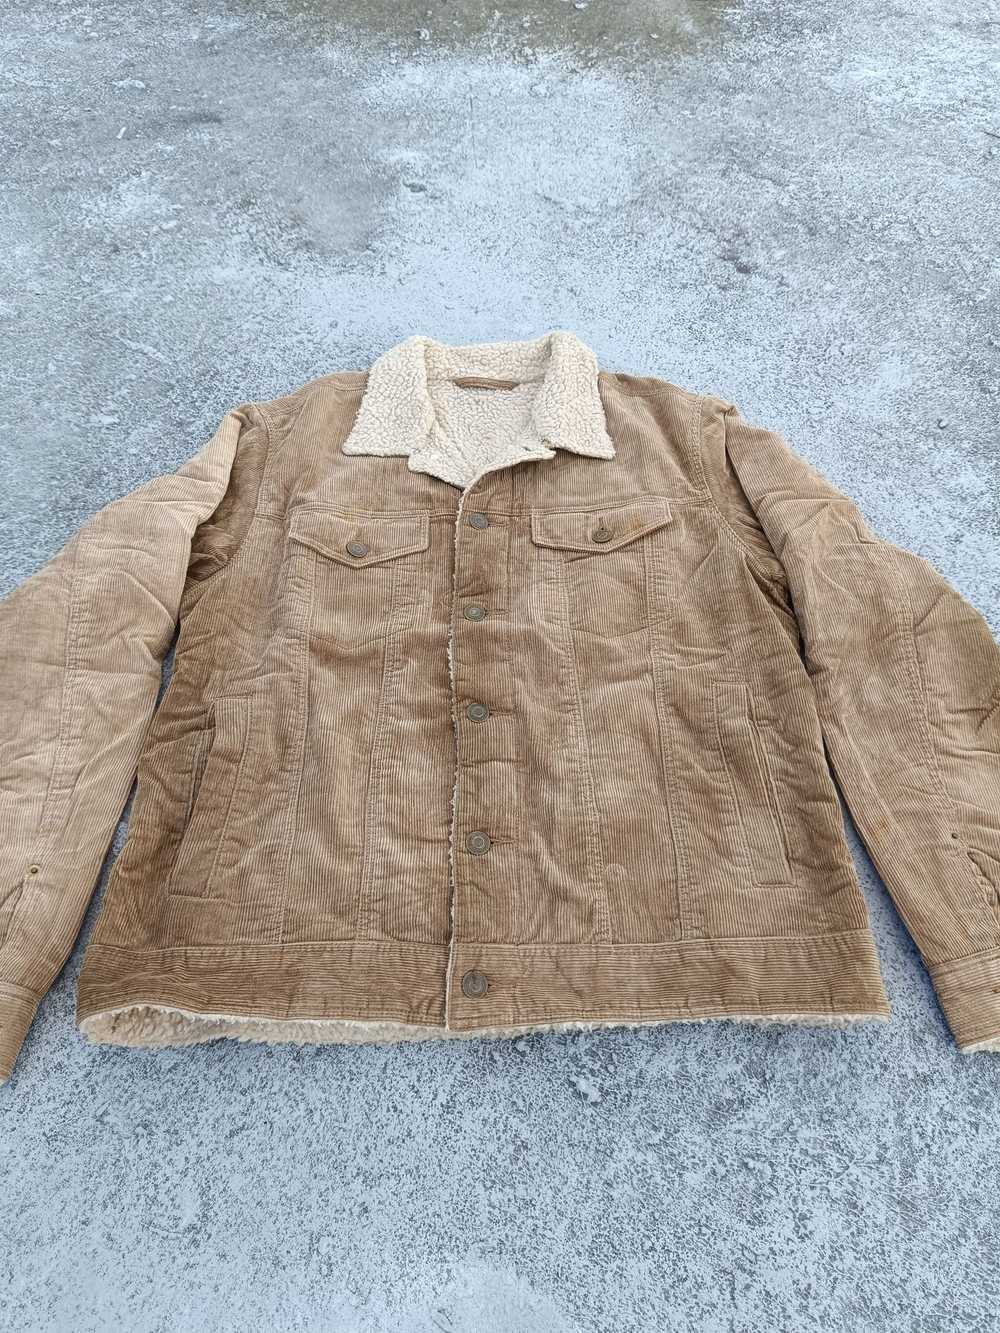 Corduroi Club × GU × Streetwear GU corduroi jacket - image 3